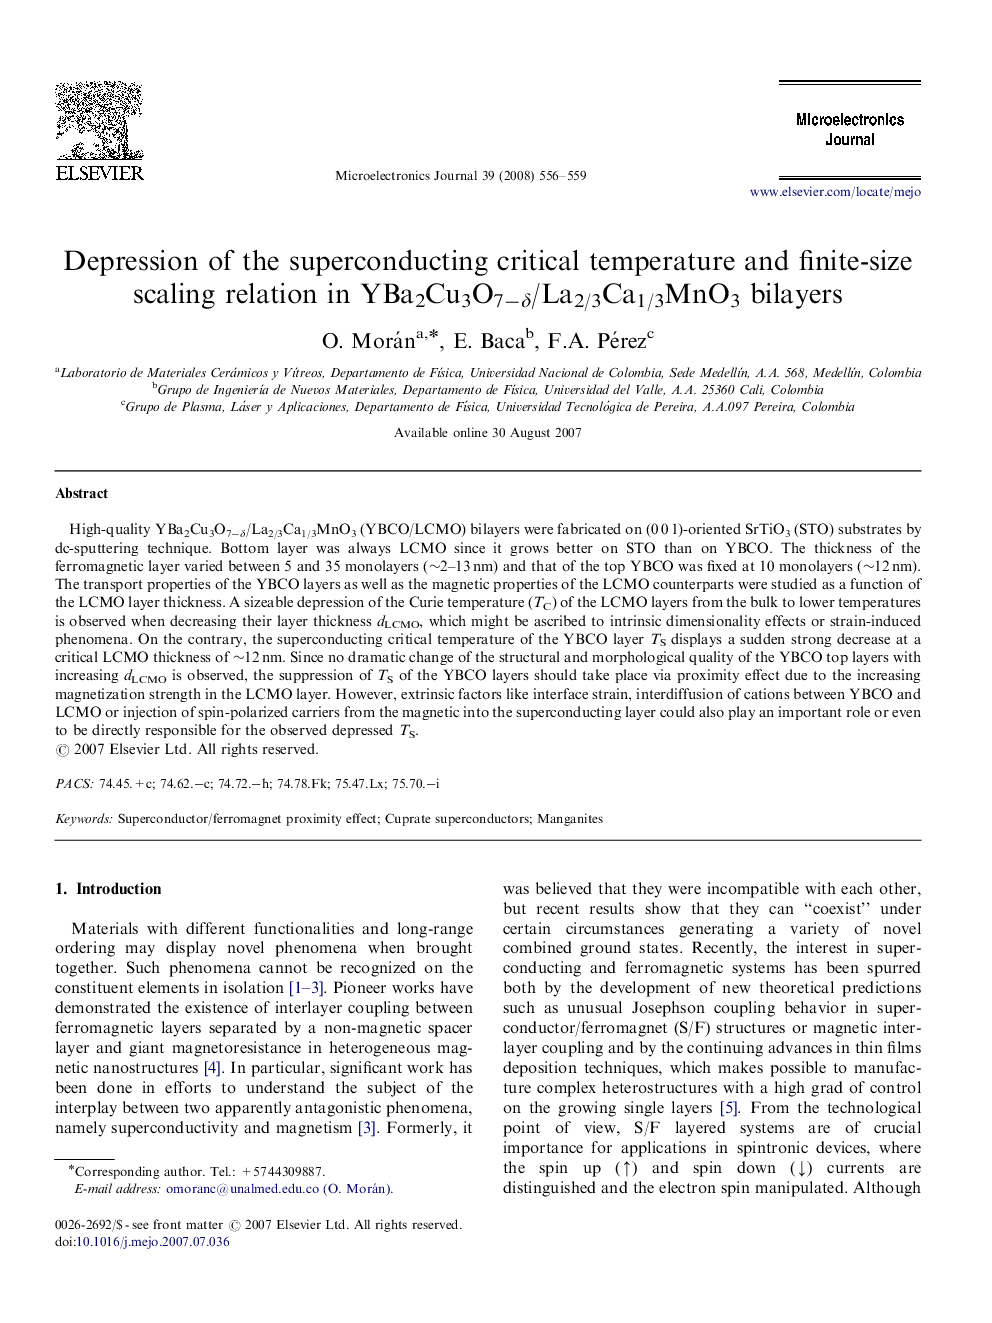 Depression of the superconducting critical temperature and finite-size scaling relation in YBa2Cu3O7−δ/La2/3Ca1/3MnO3 bilayers